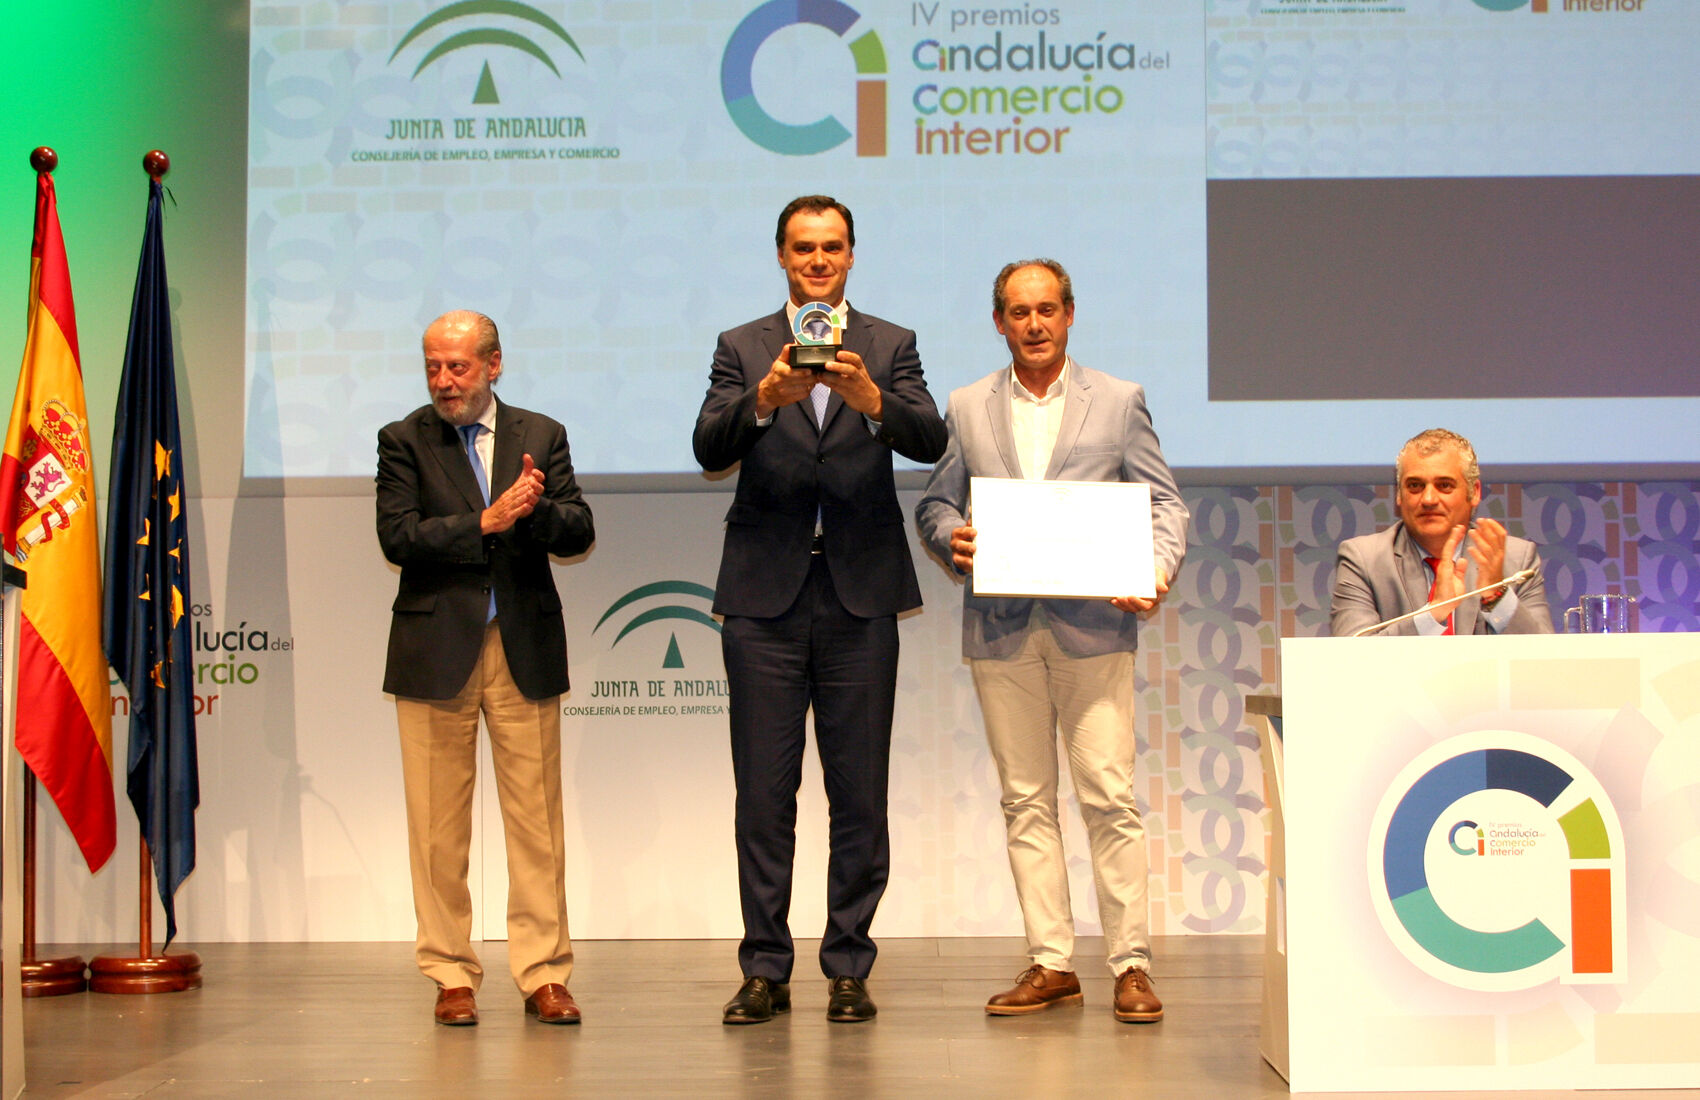 IV Premios Andalucia Comercio Interior (7)